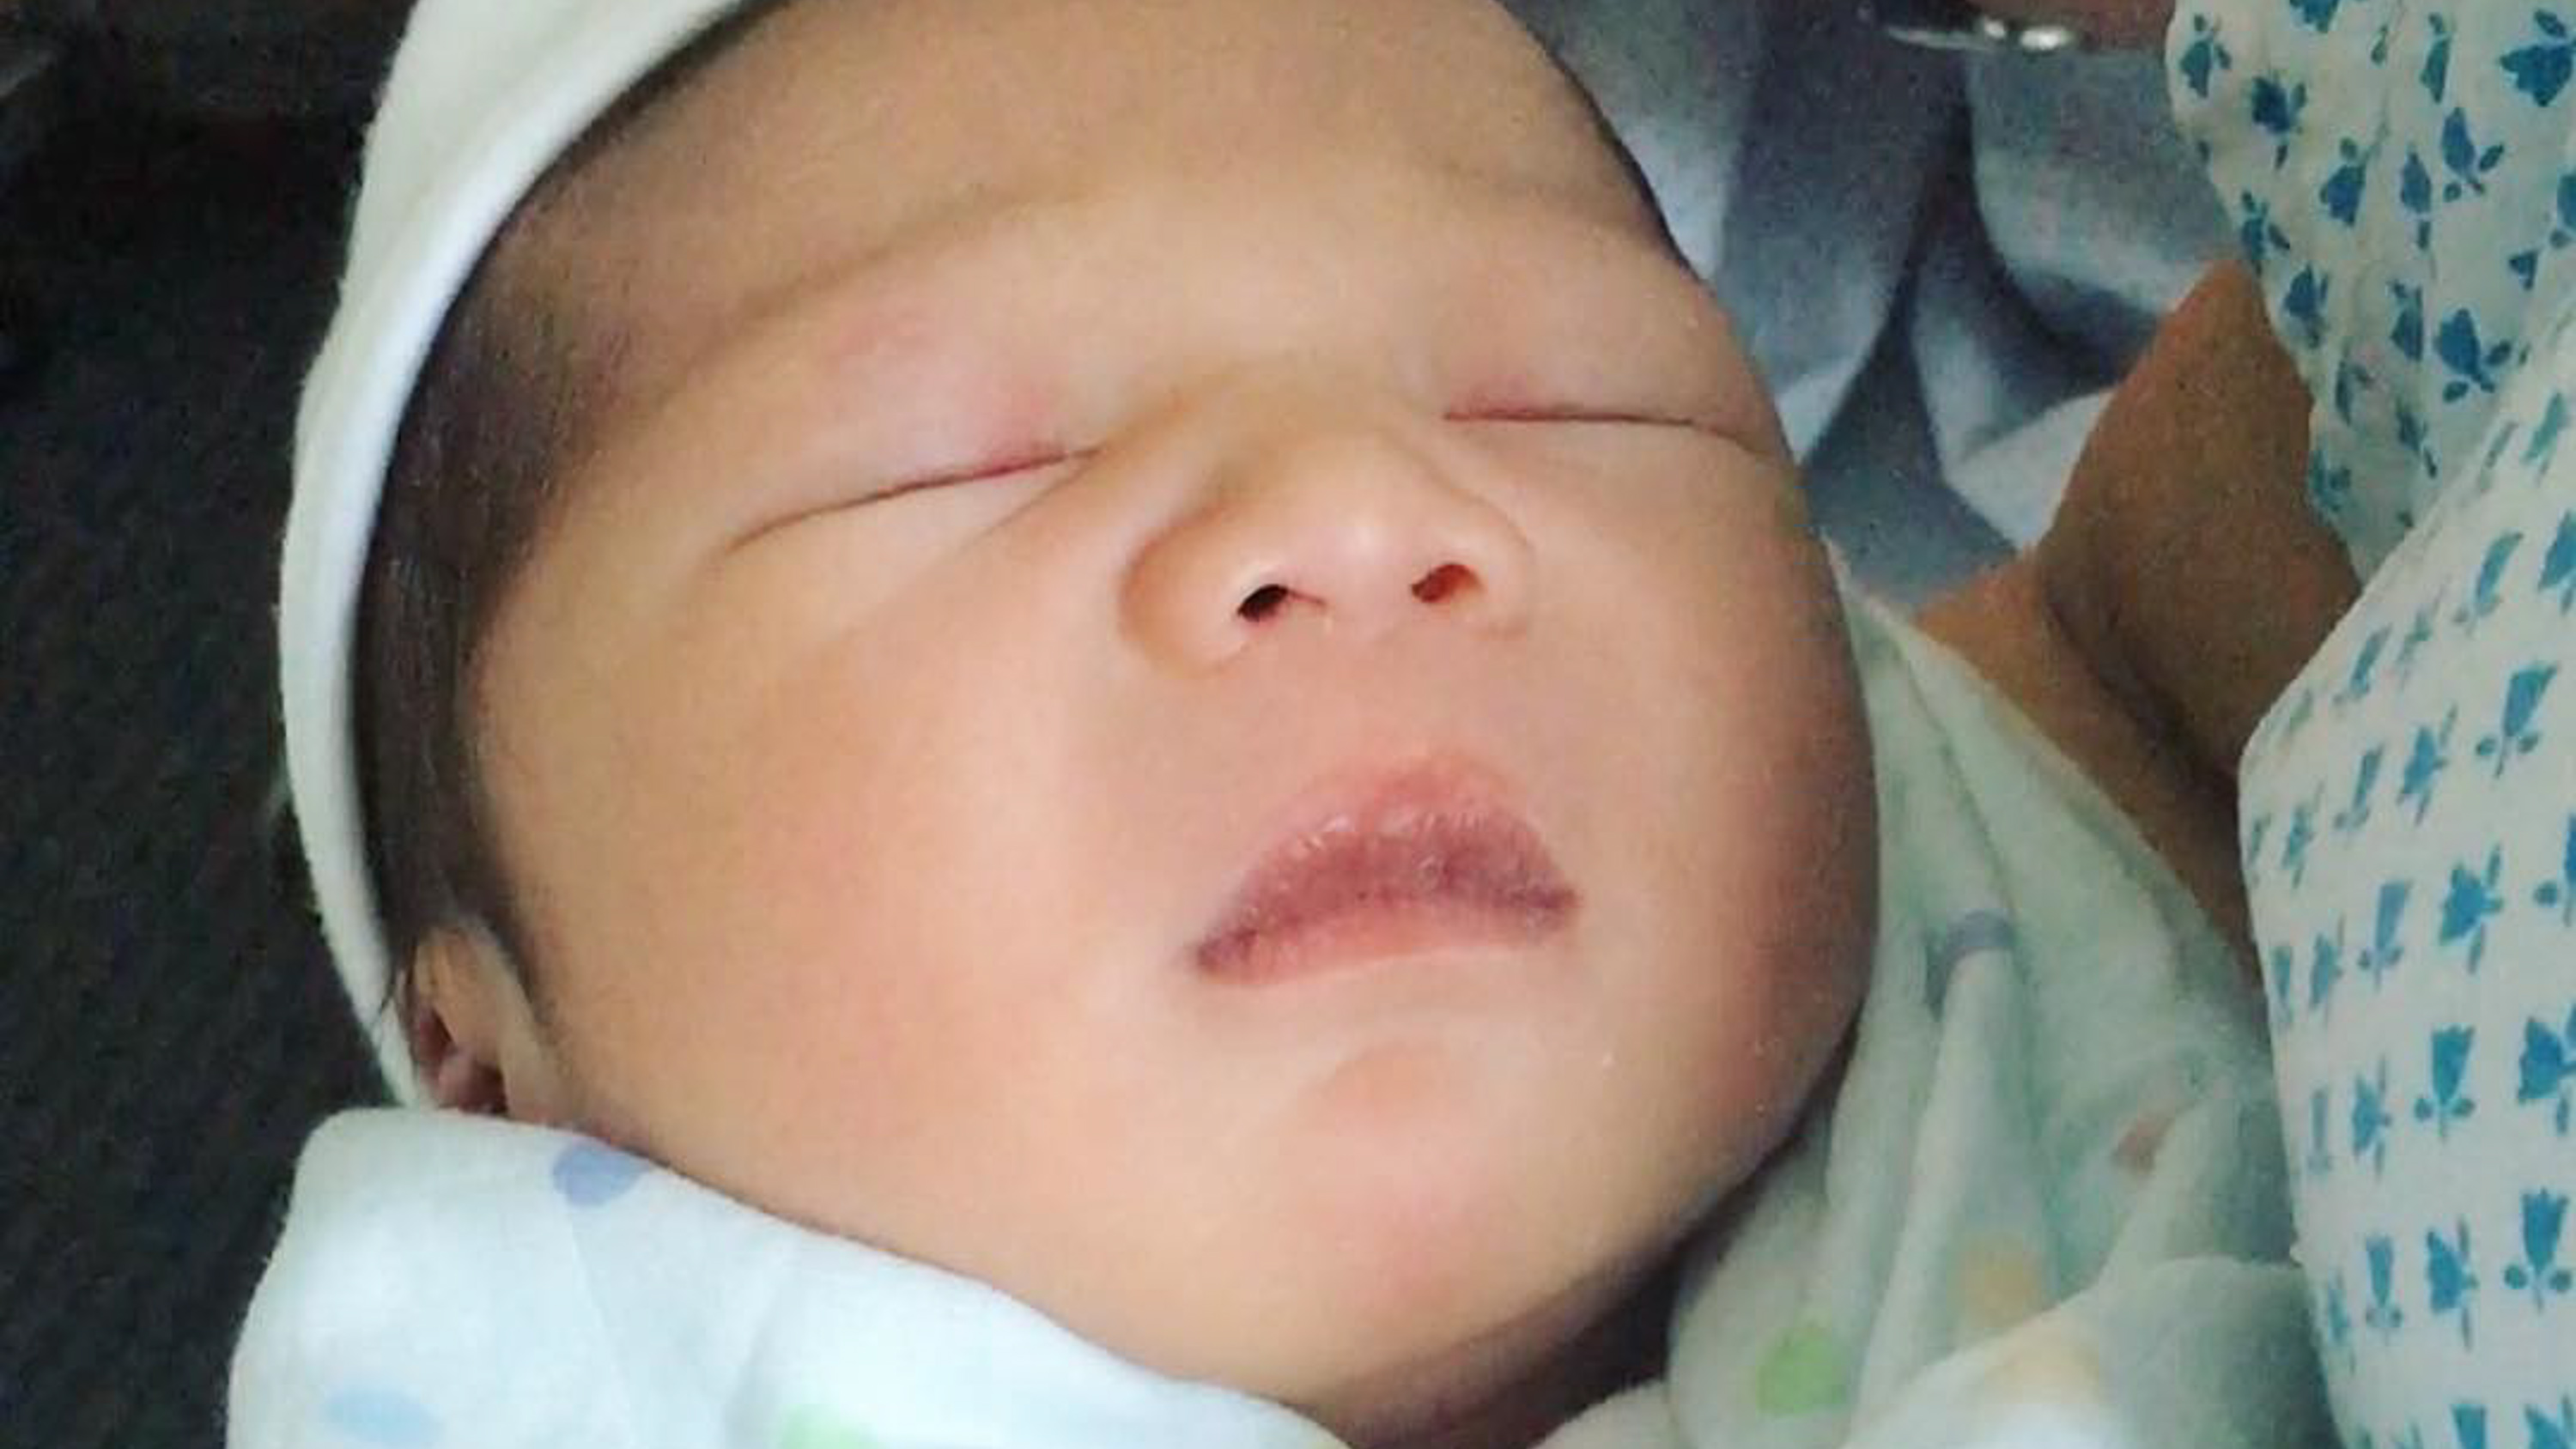 SEVE SORIANO. Alex Gonzaga posts a photo of her sister Toni Gonzaga's newborn son with Paul Soriano. Screengrab from Instagram/cathygonzaga 